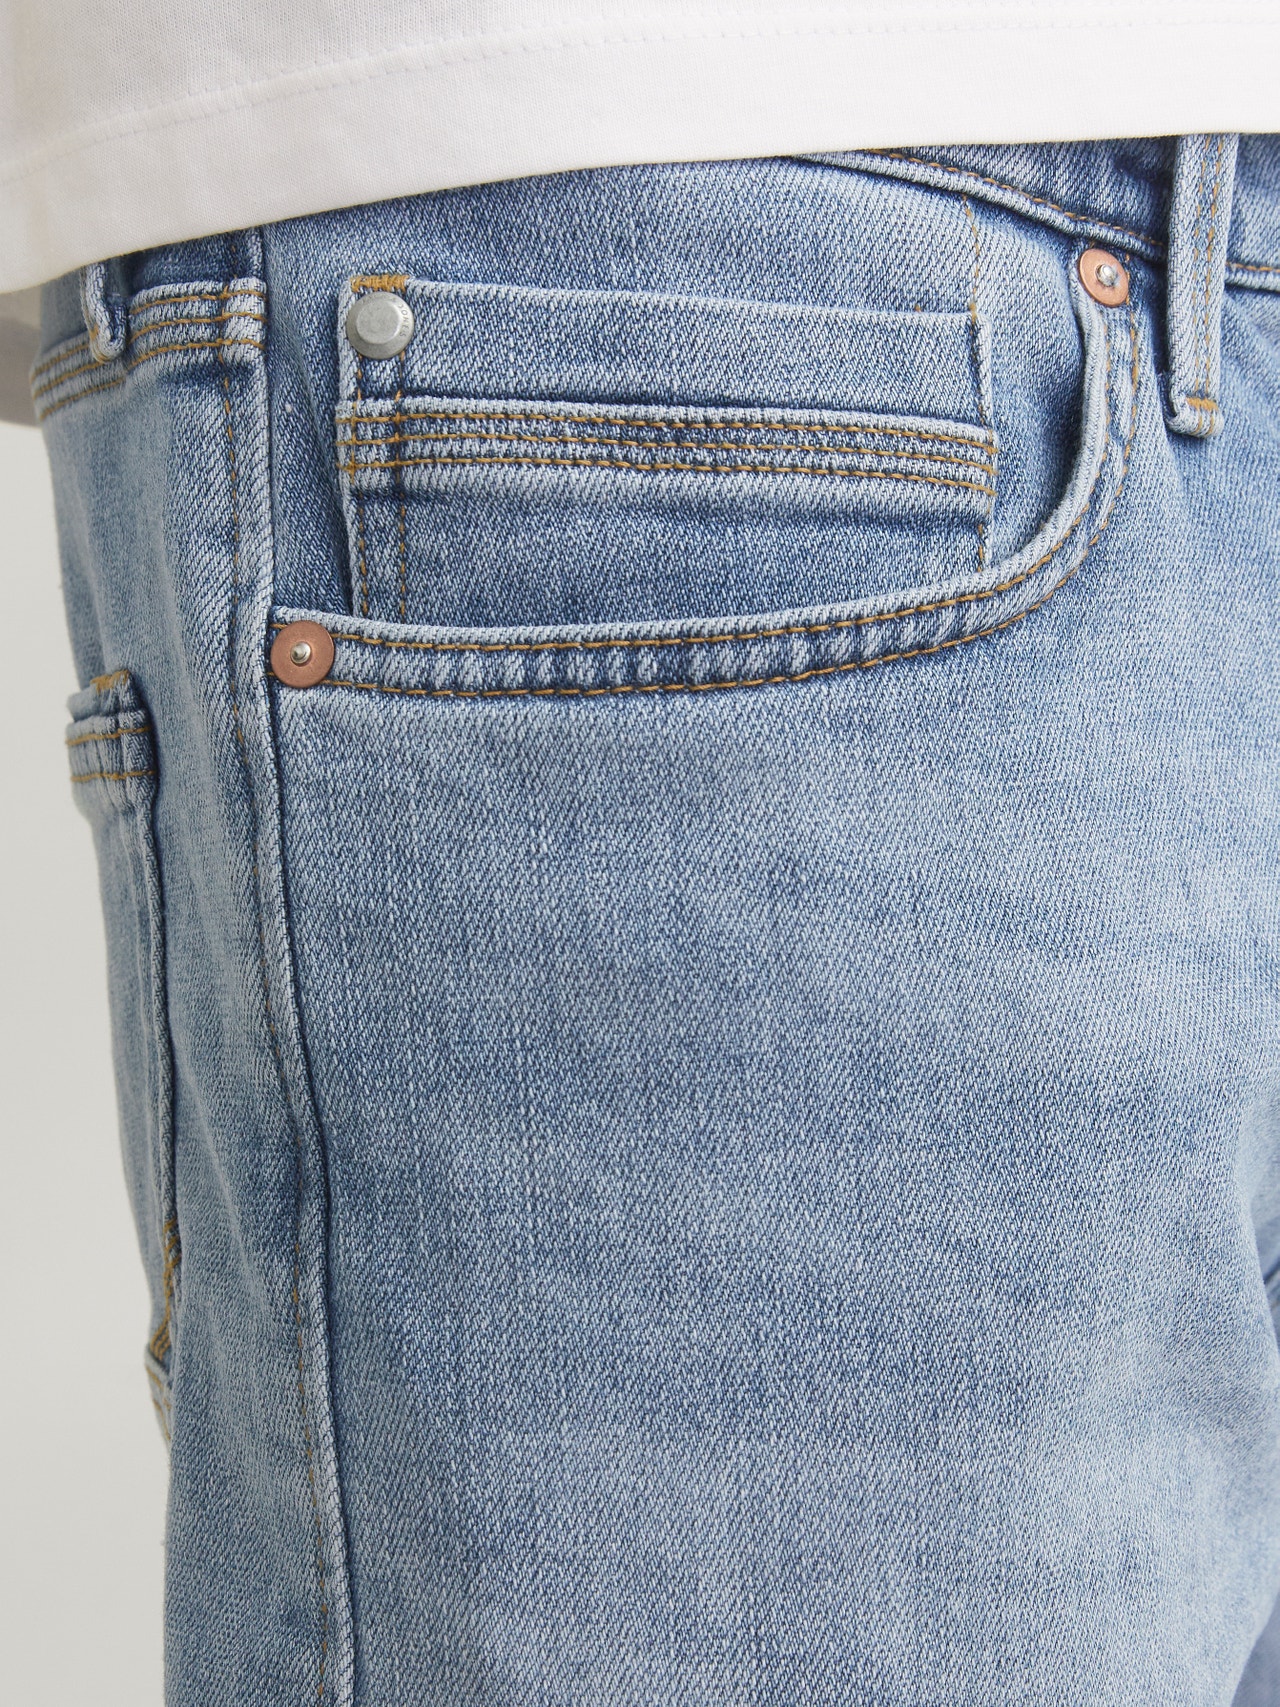 Jack & Jones Bermuda in jeans Relaxed Fit -Blue Denim - 12249095